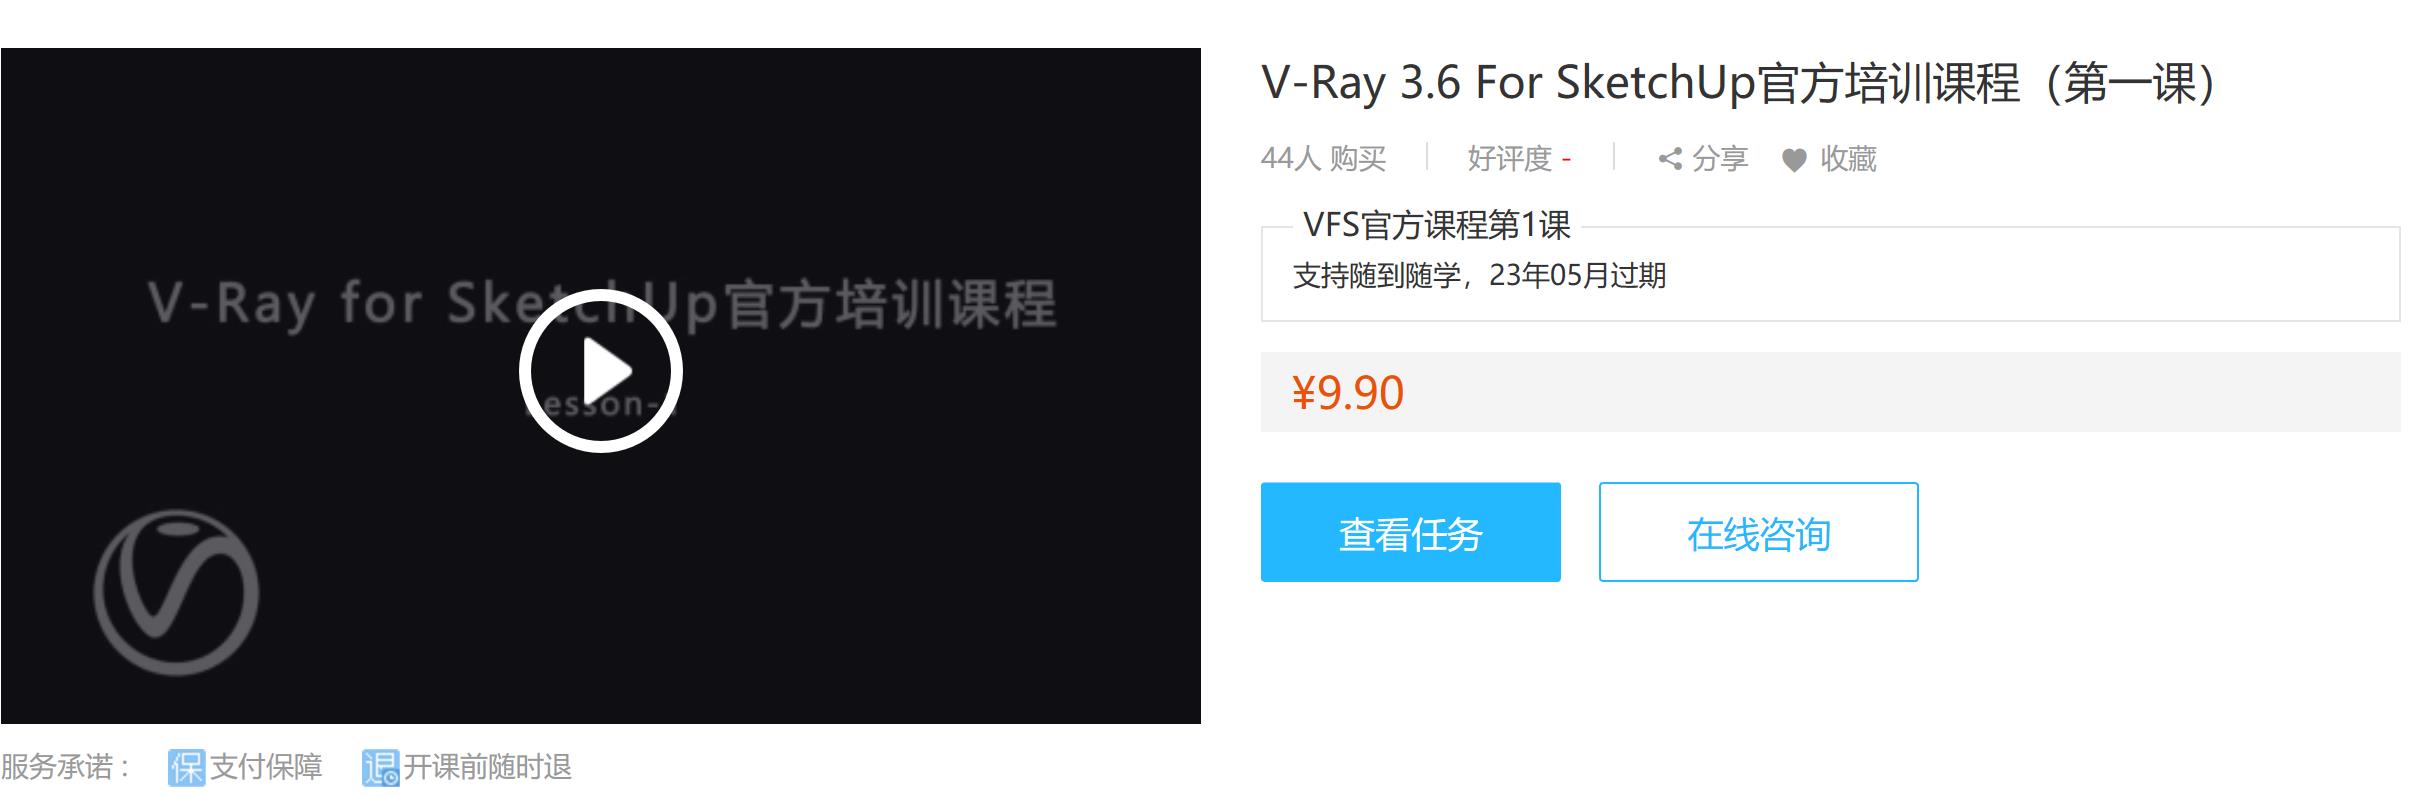 V-Ray 3.6 for SketchUp 官方培训课程价格